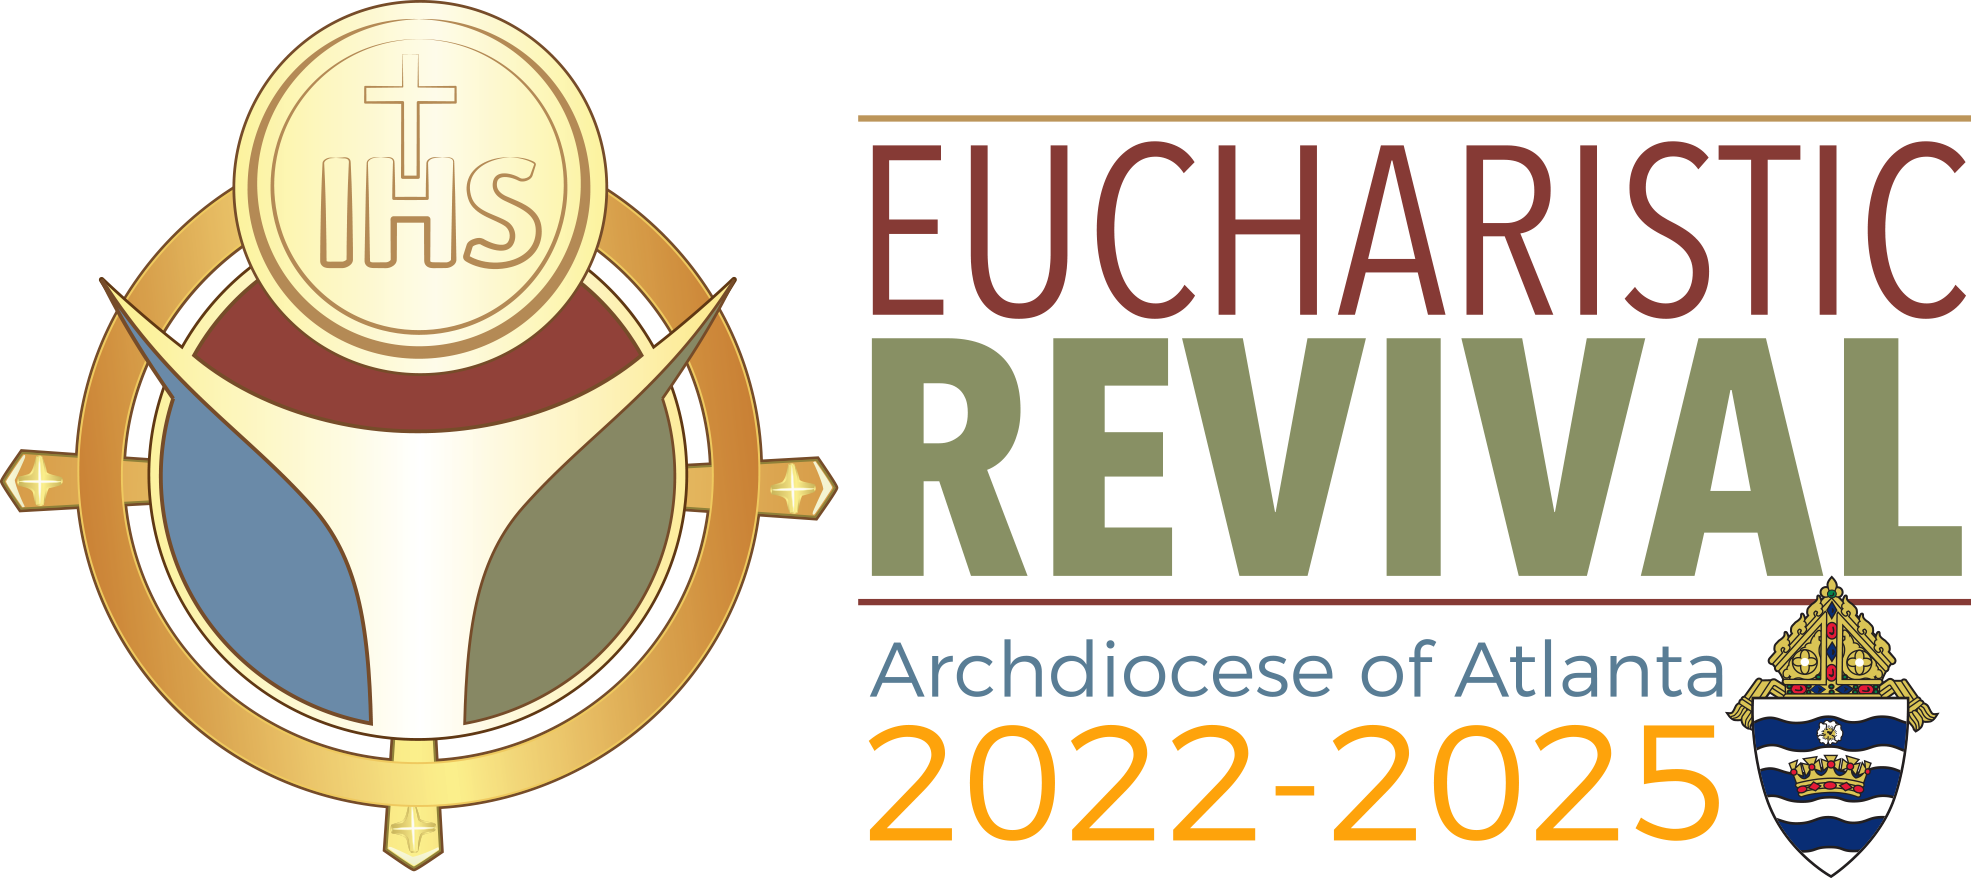 eucharistic Revival 2022-2025
Archdiocese of Atlanta